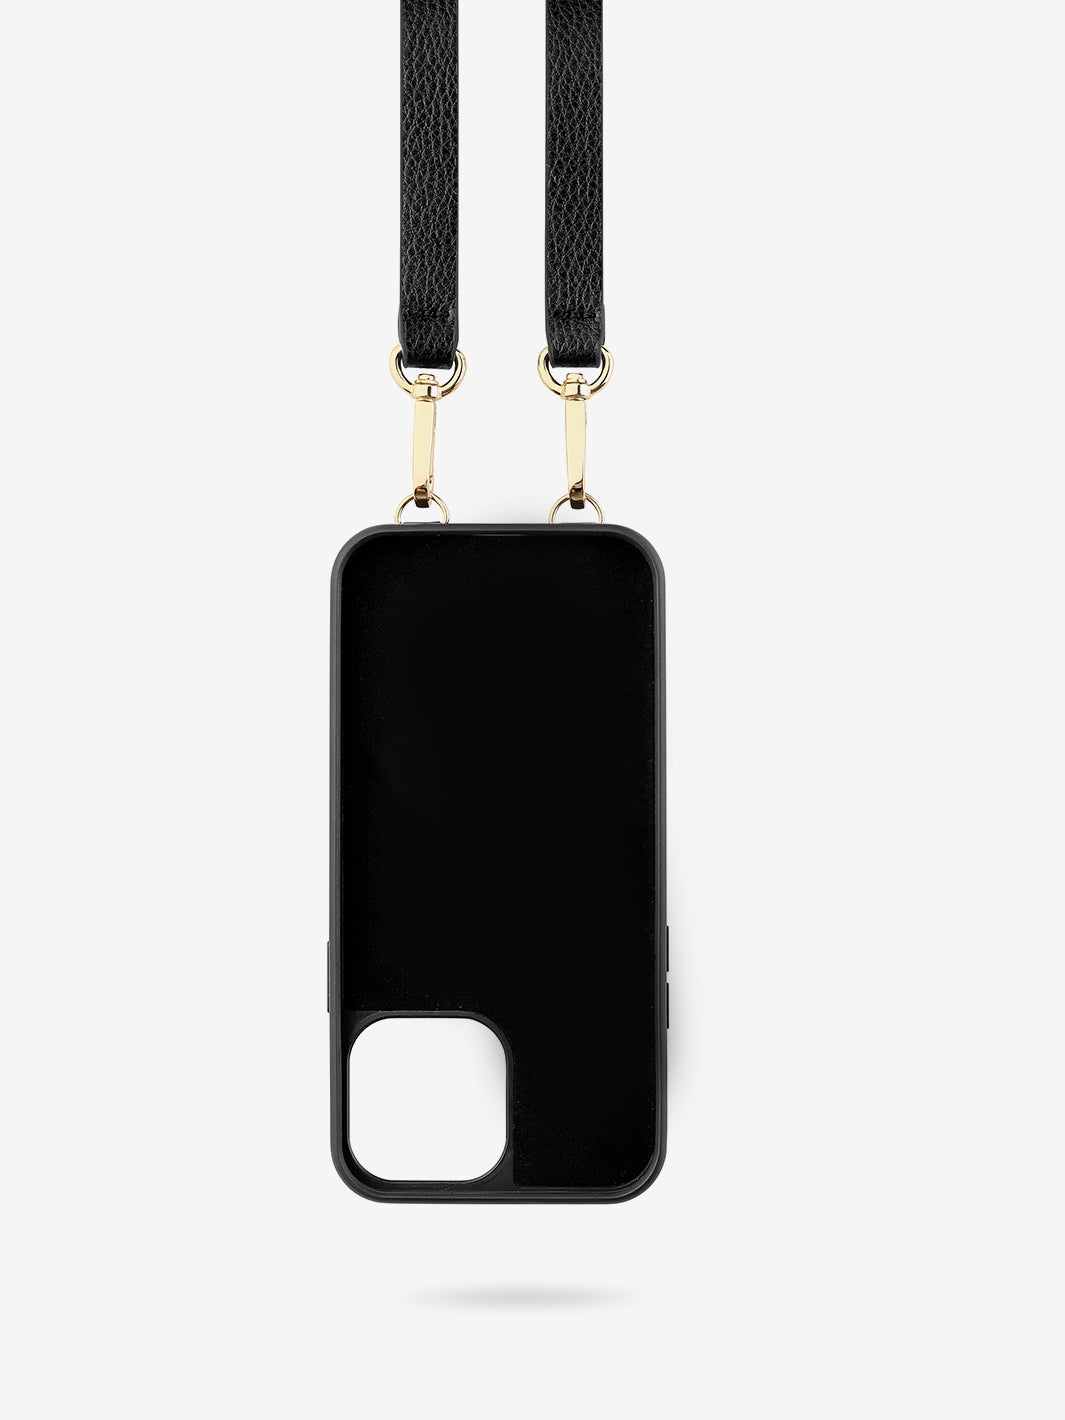 Lychee Crossbody iPhone case in black-5